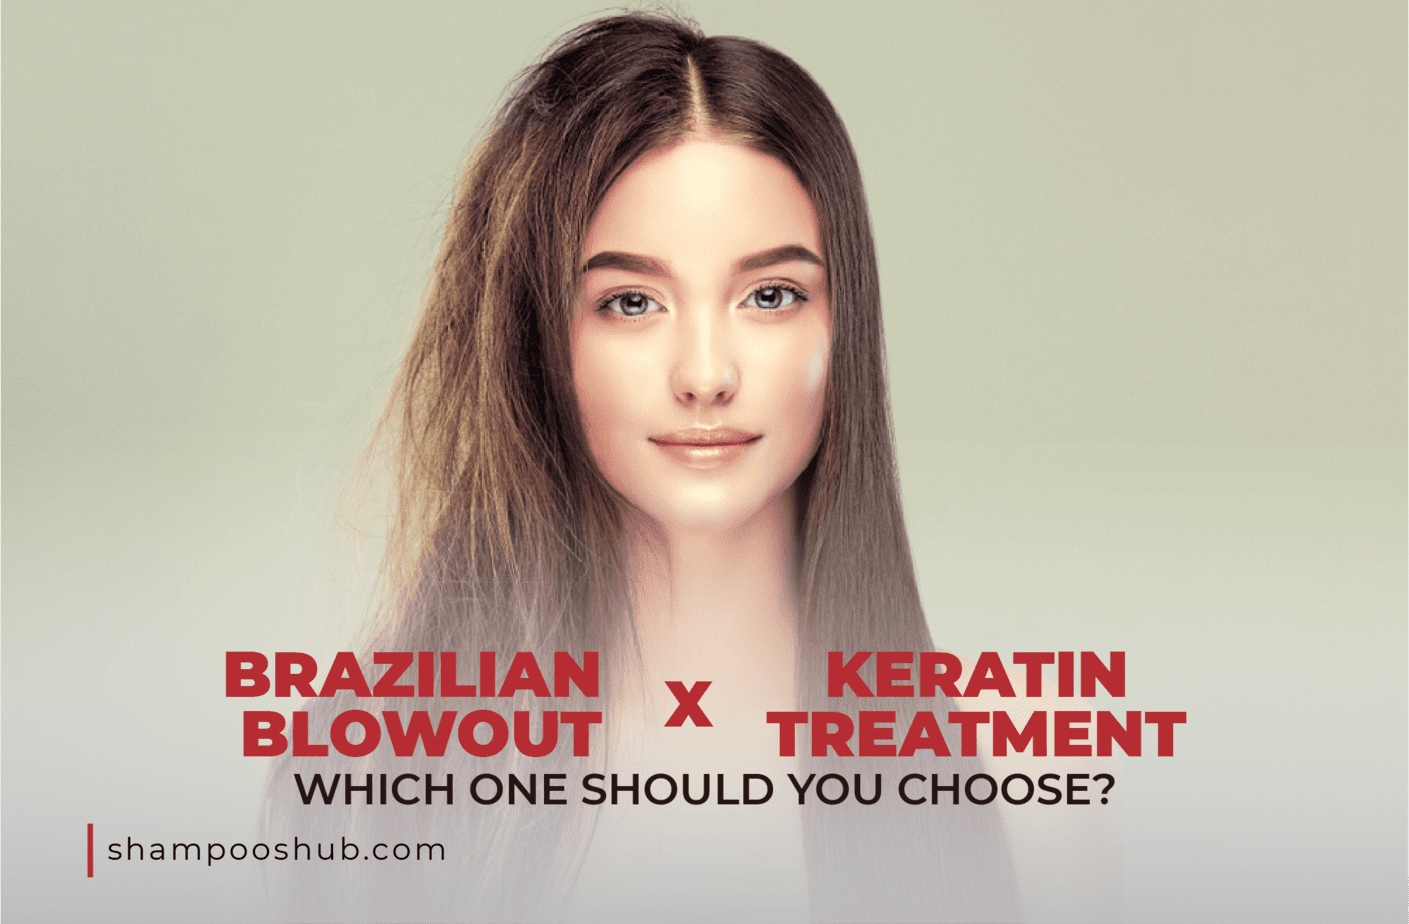 Brazilian Blowout Vs Keratin Treatment